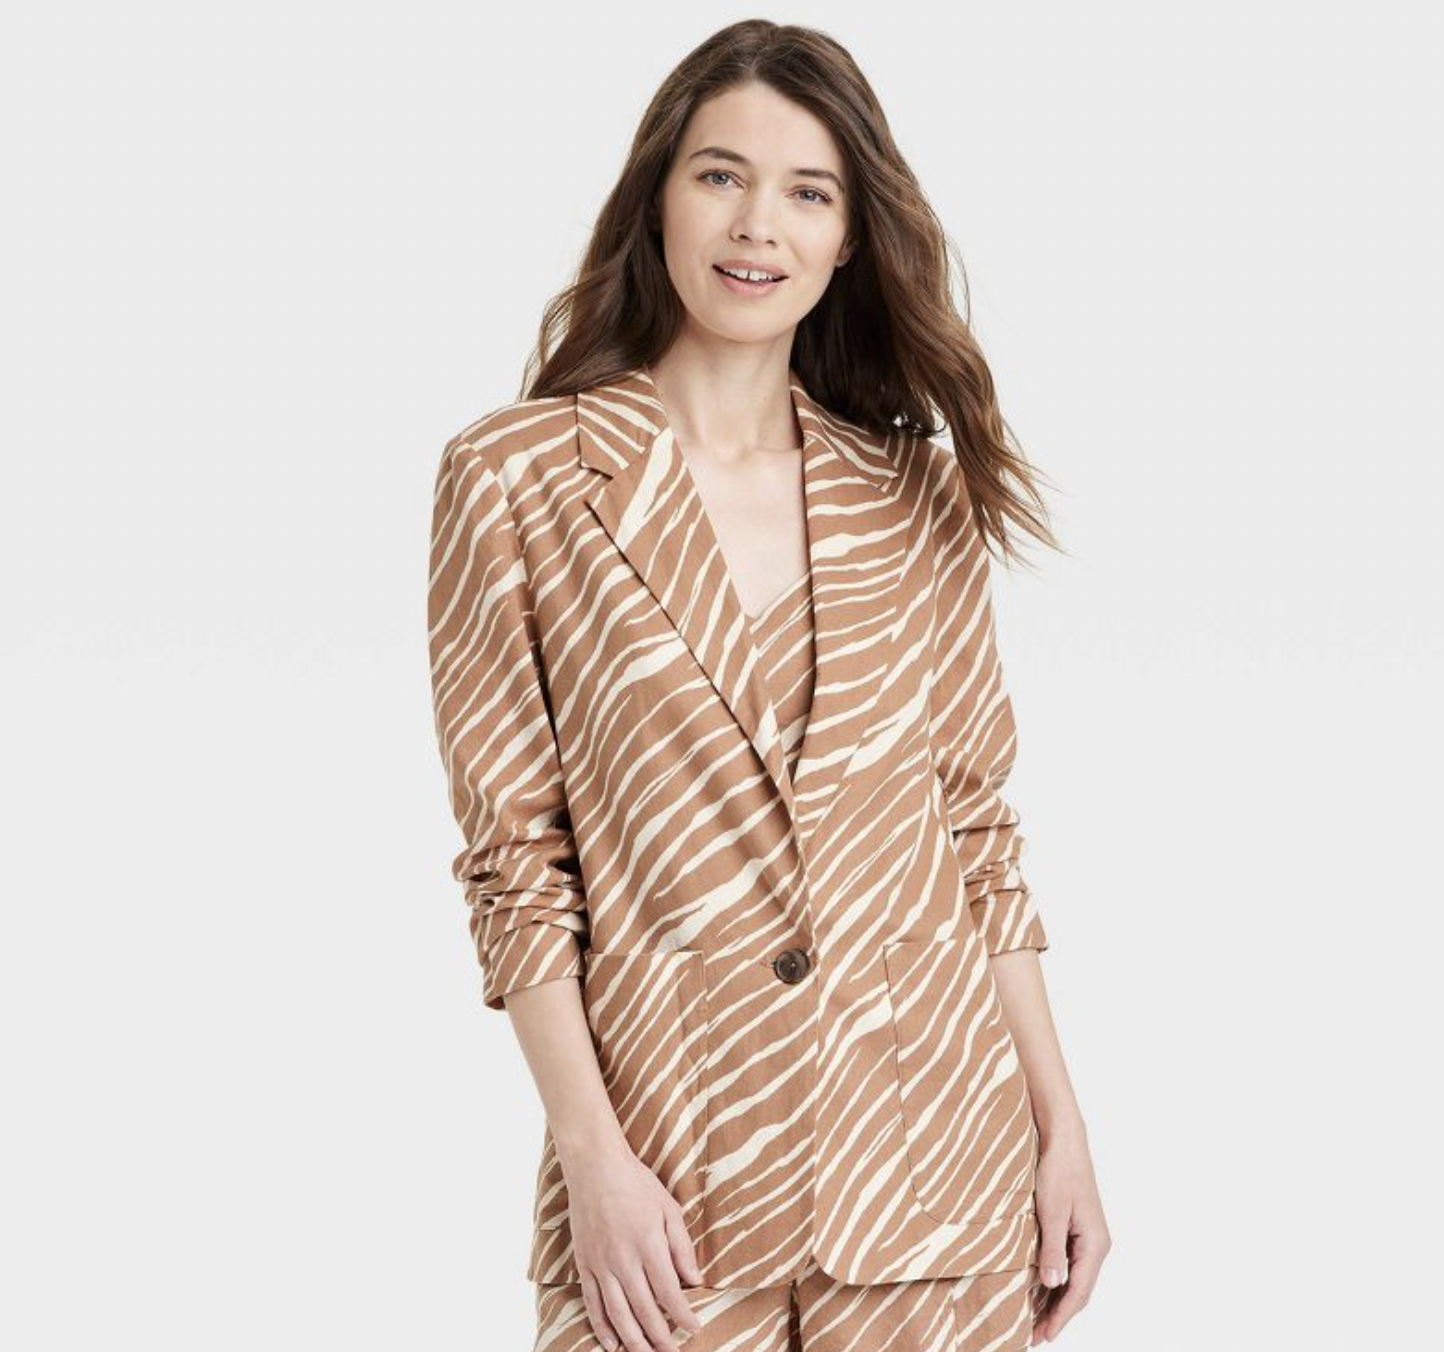 A model wearing the blazer in a light brown zebra print